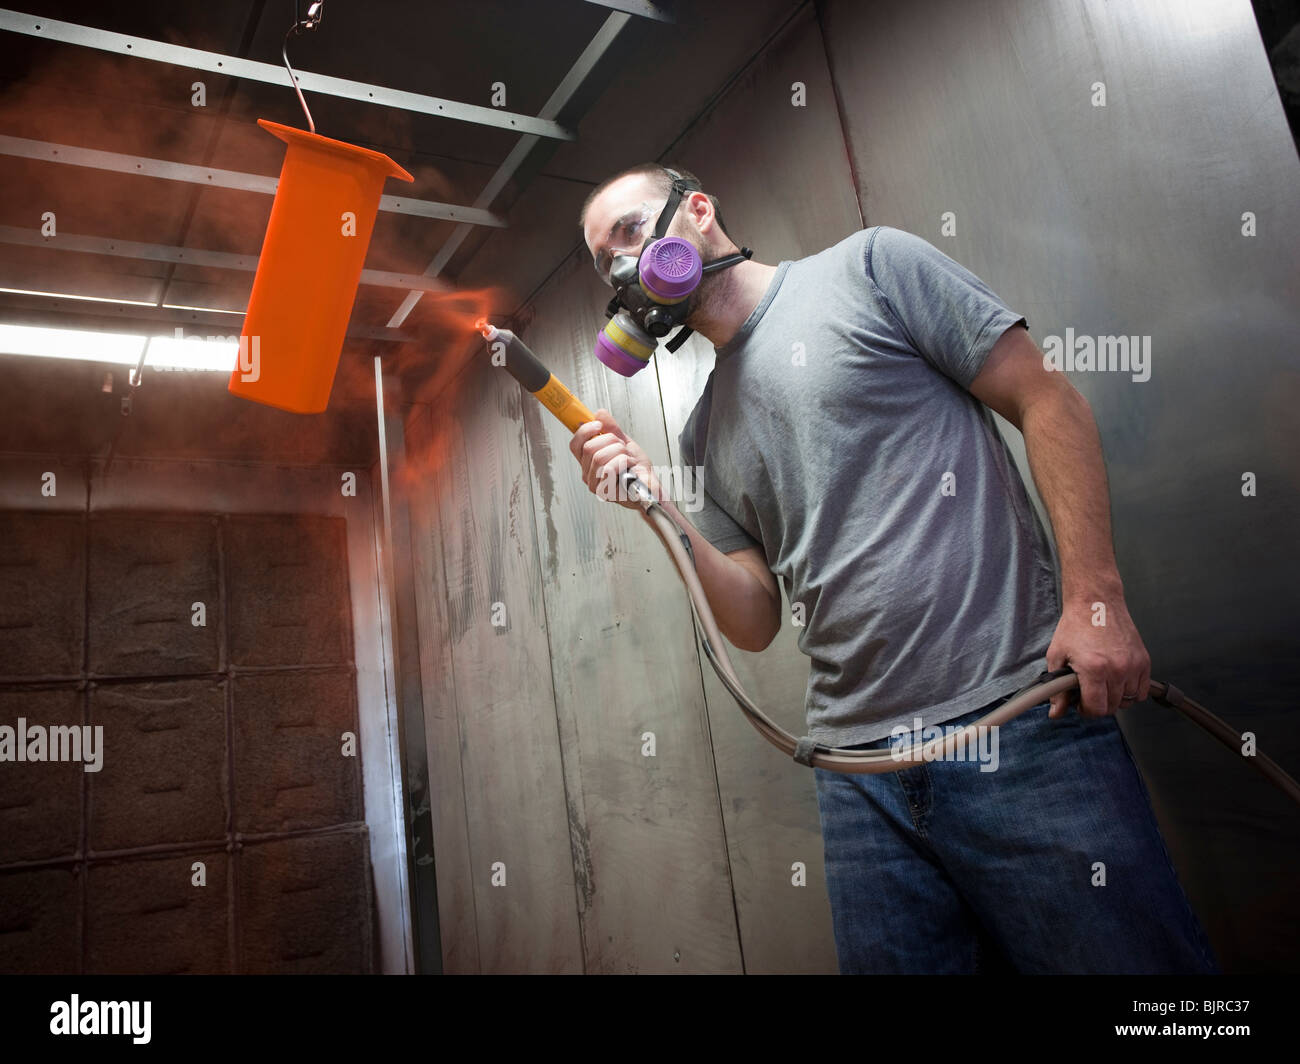 USA, Utah, Orem, man using paint spray gun Stock Photo